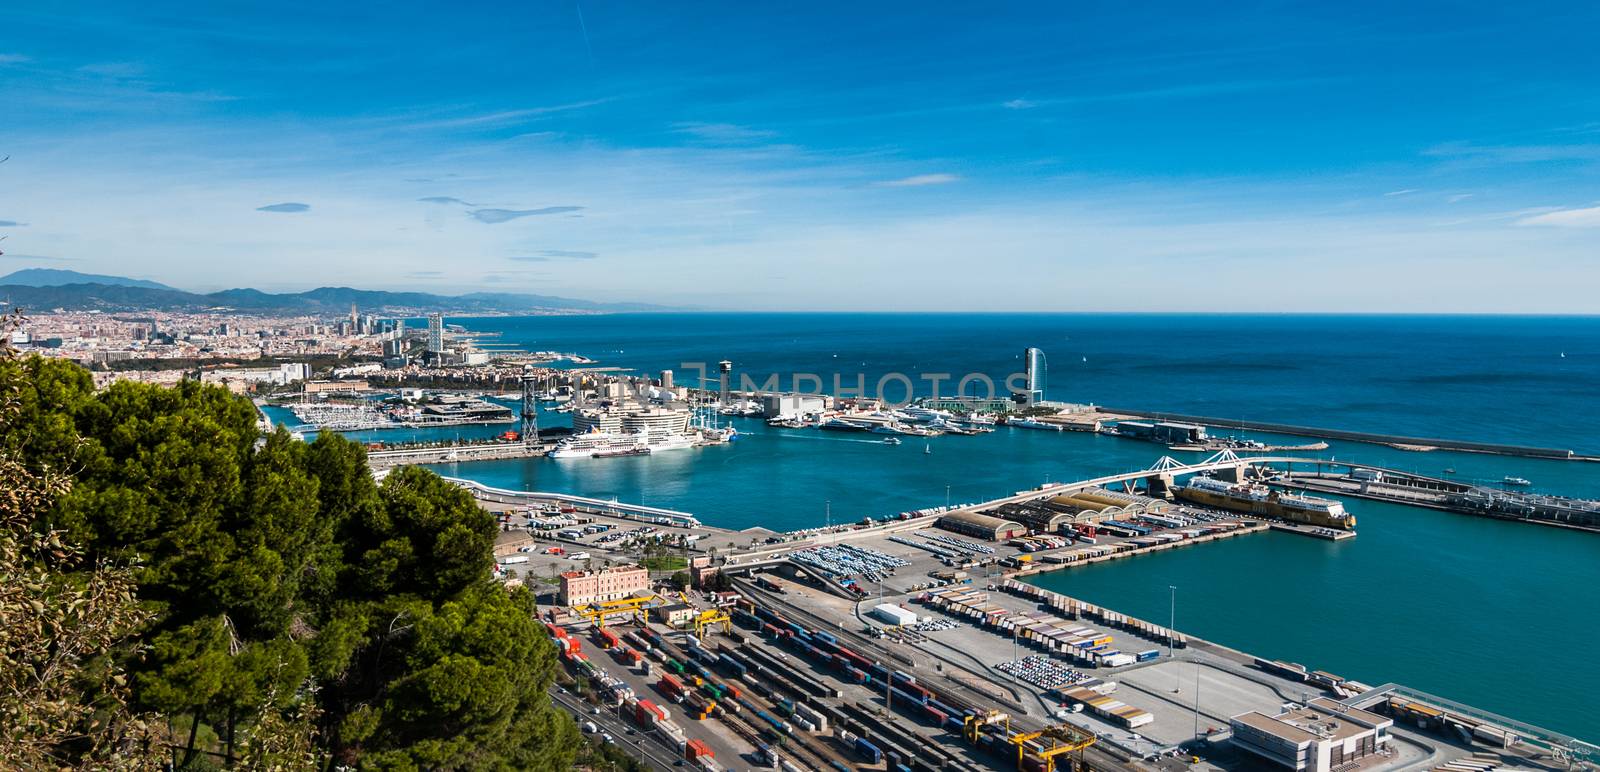 Port of Barcelona by valleyboi63